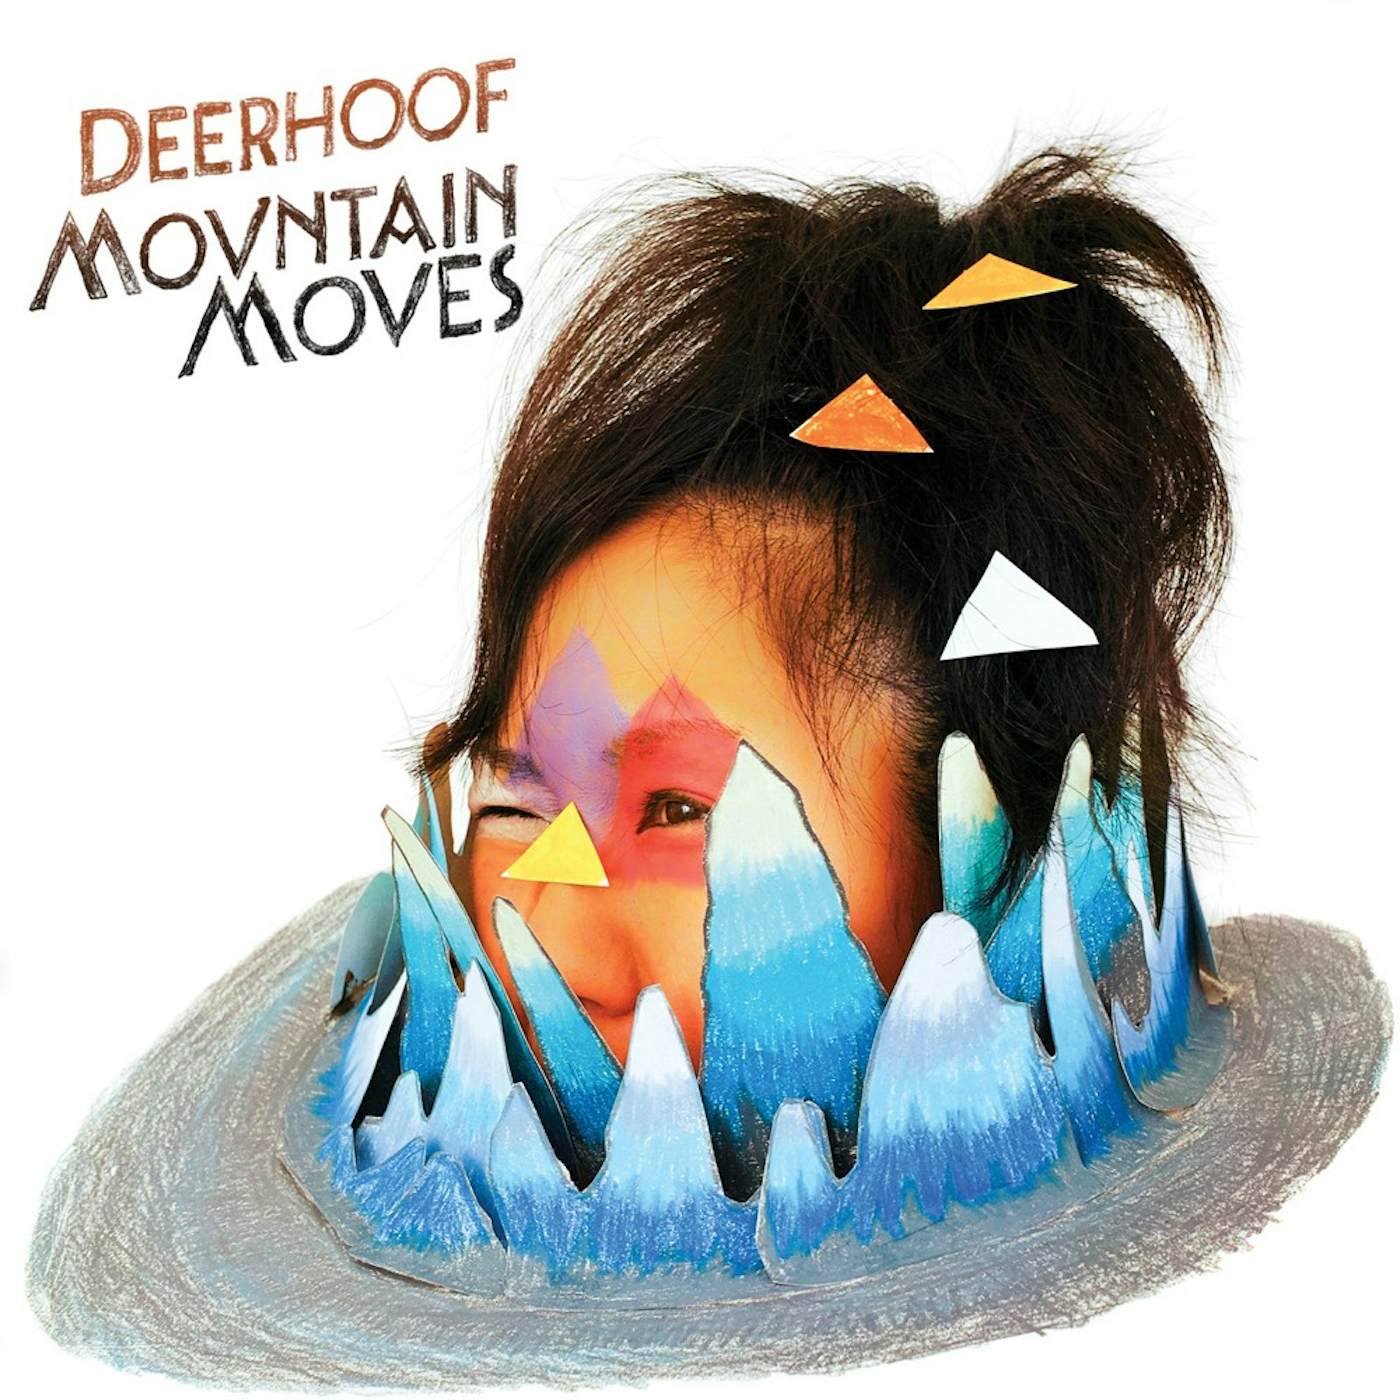 Deerhoof Mountain Moves Vinyl Record